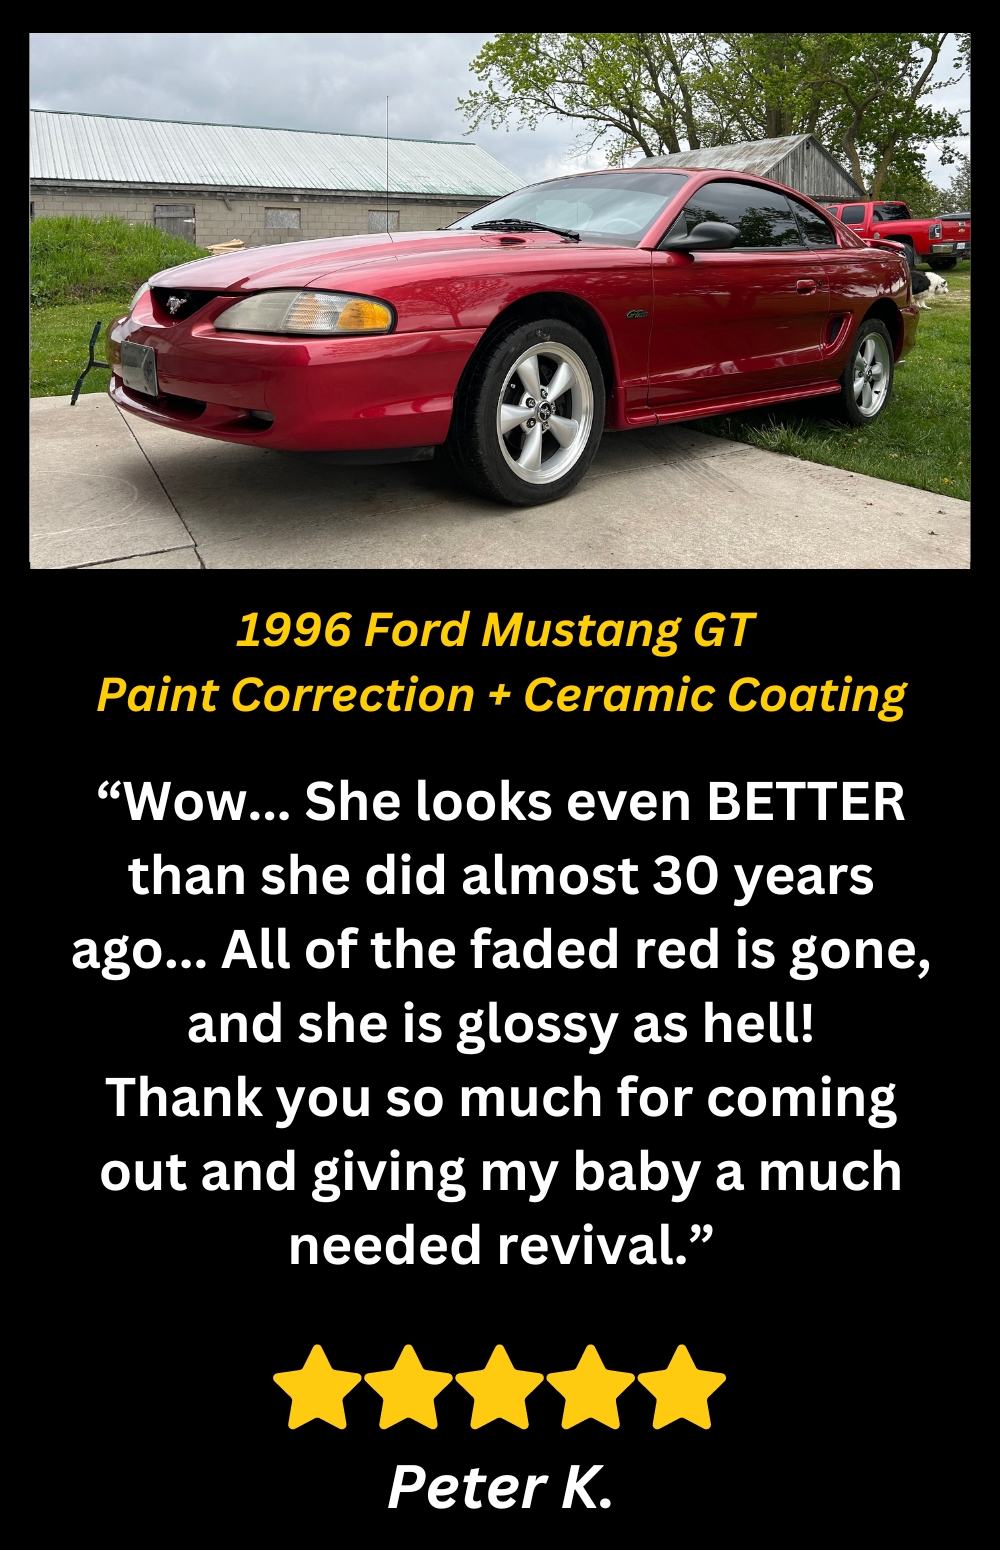 Peter K Mustang GT Review